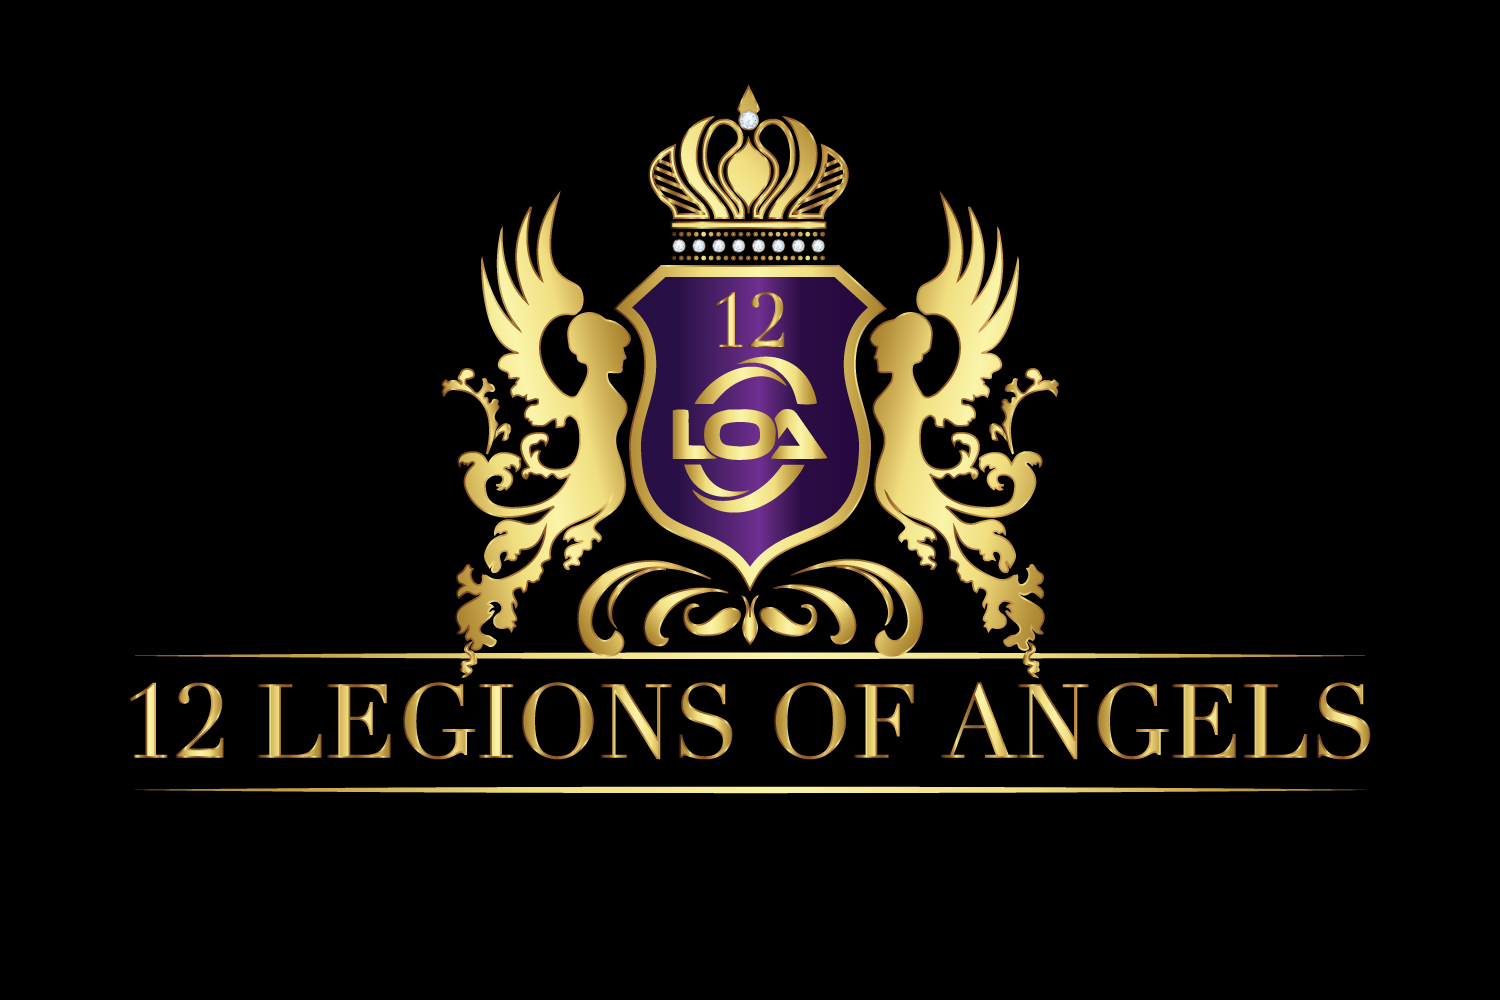 12 Legions of Angels